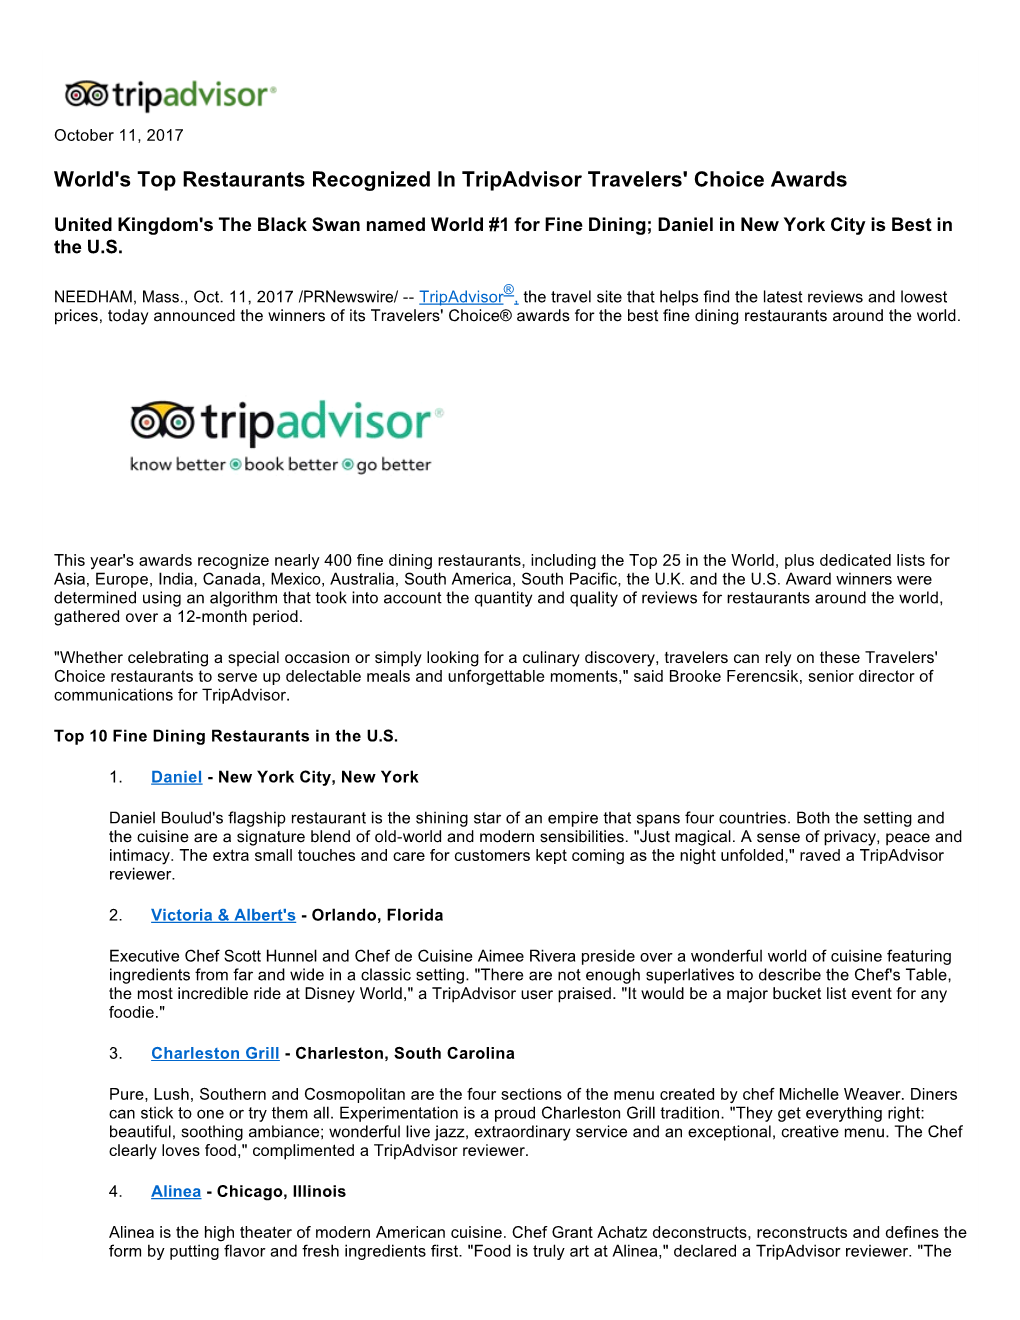 World's Top Restaurants Recognized in Tripadvisor Travelers' Choice Awards